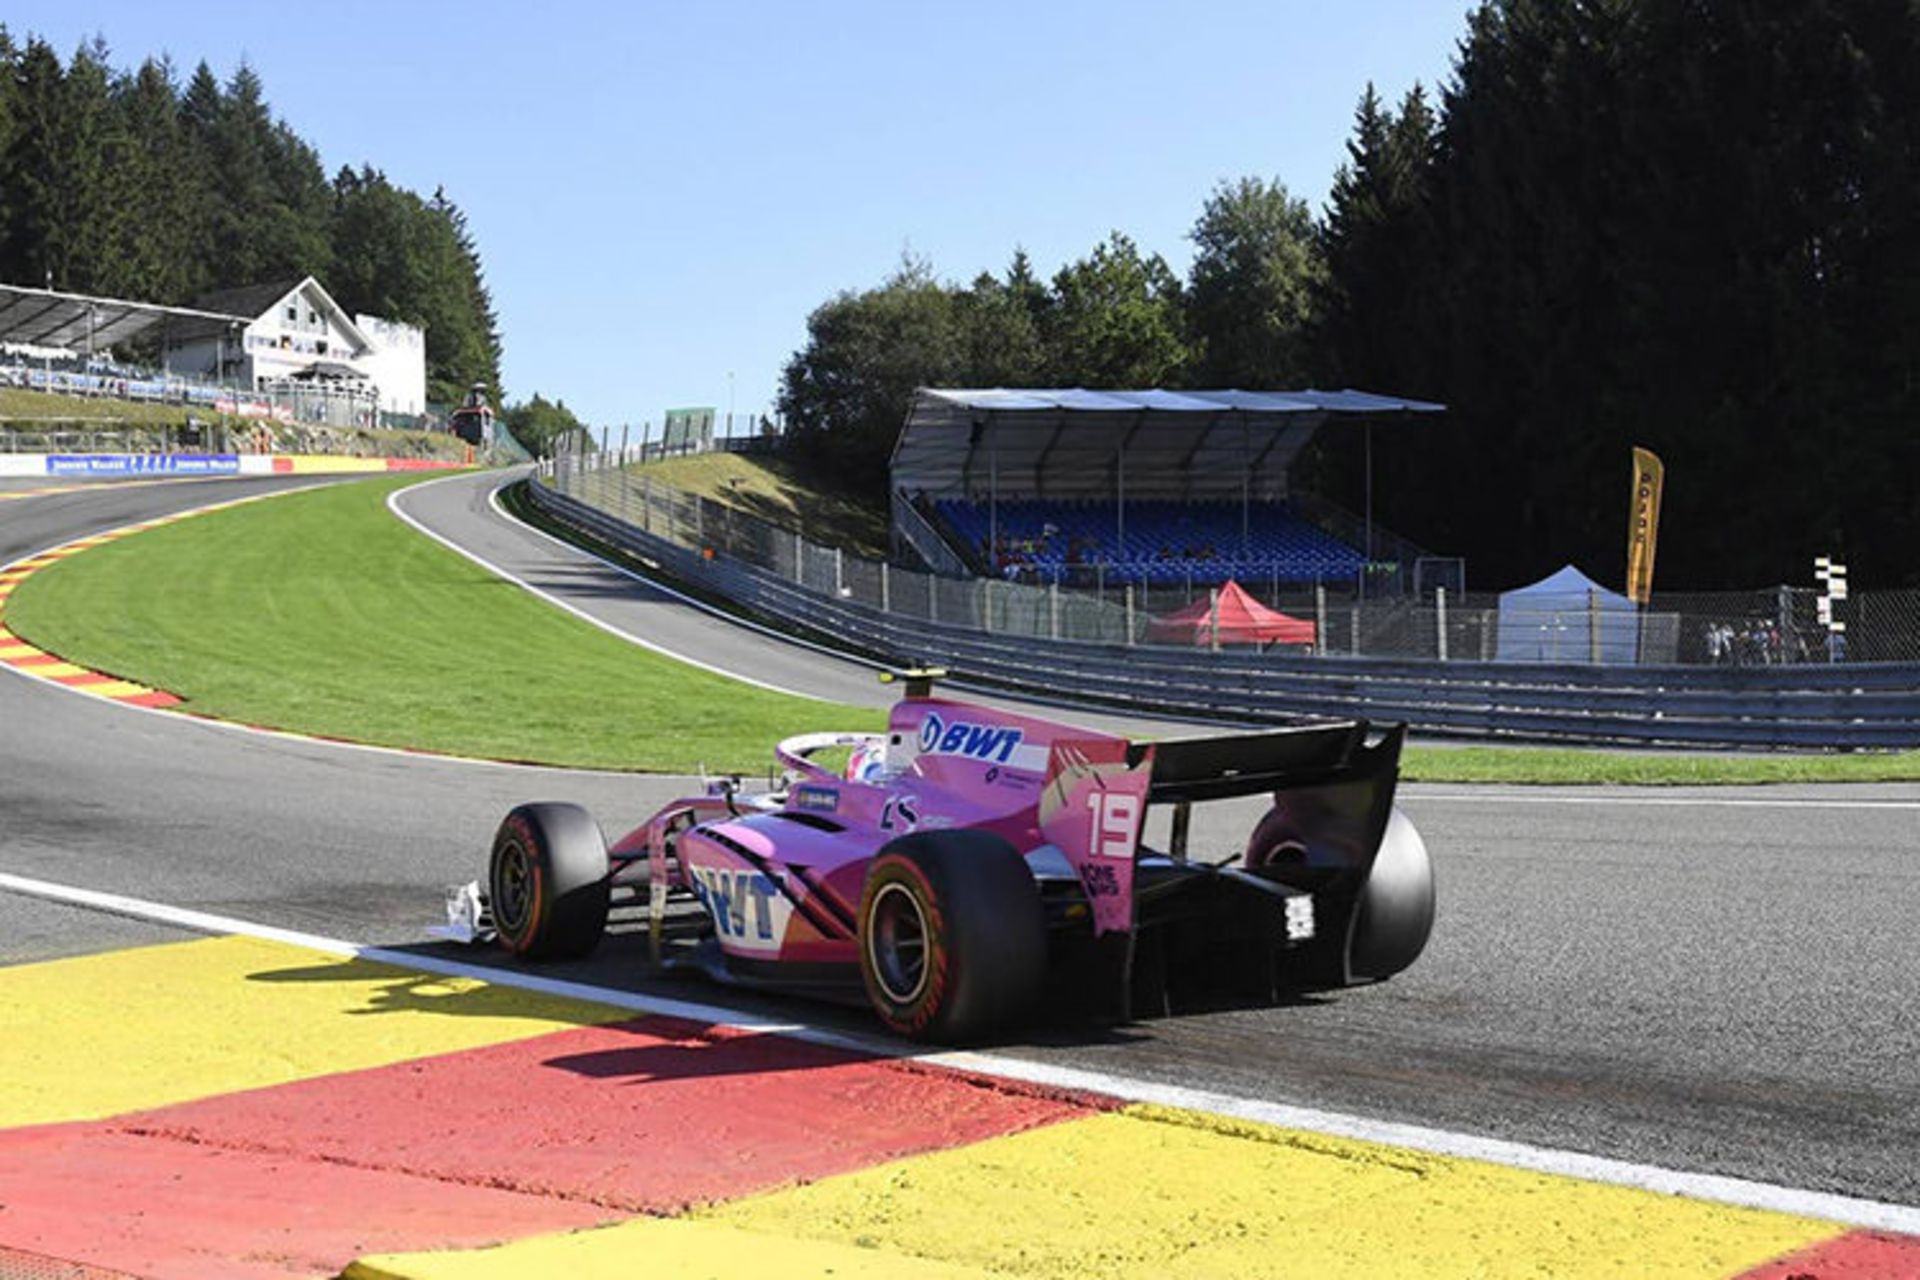 Belgium Grand Prix Formula Two / گرندپری فرمول 2 بلژیک